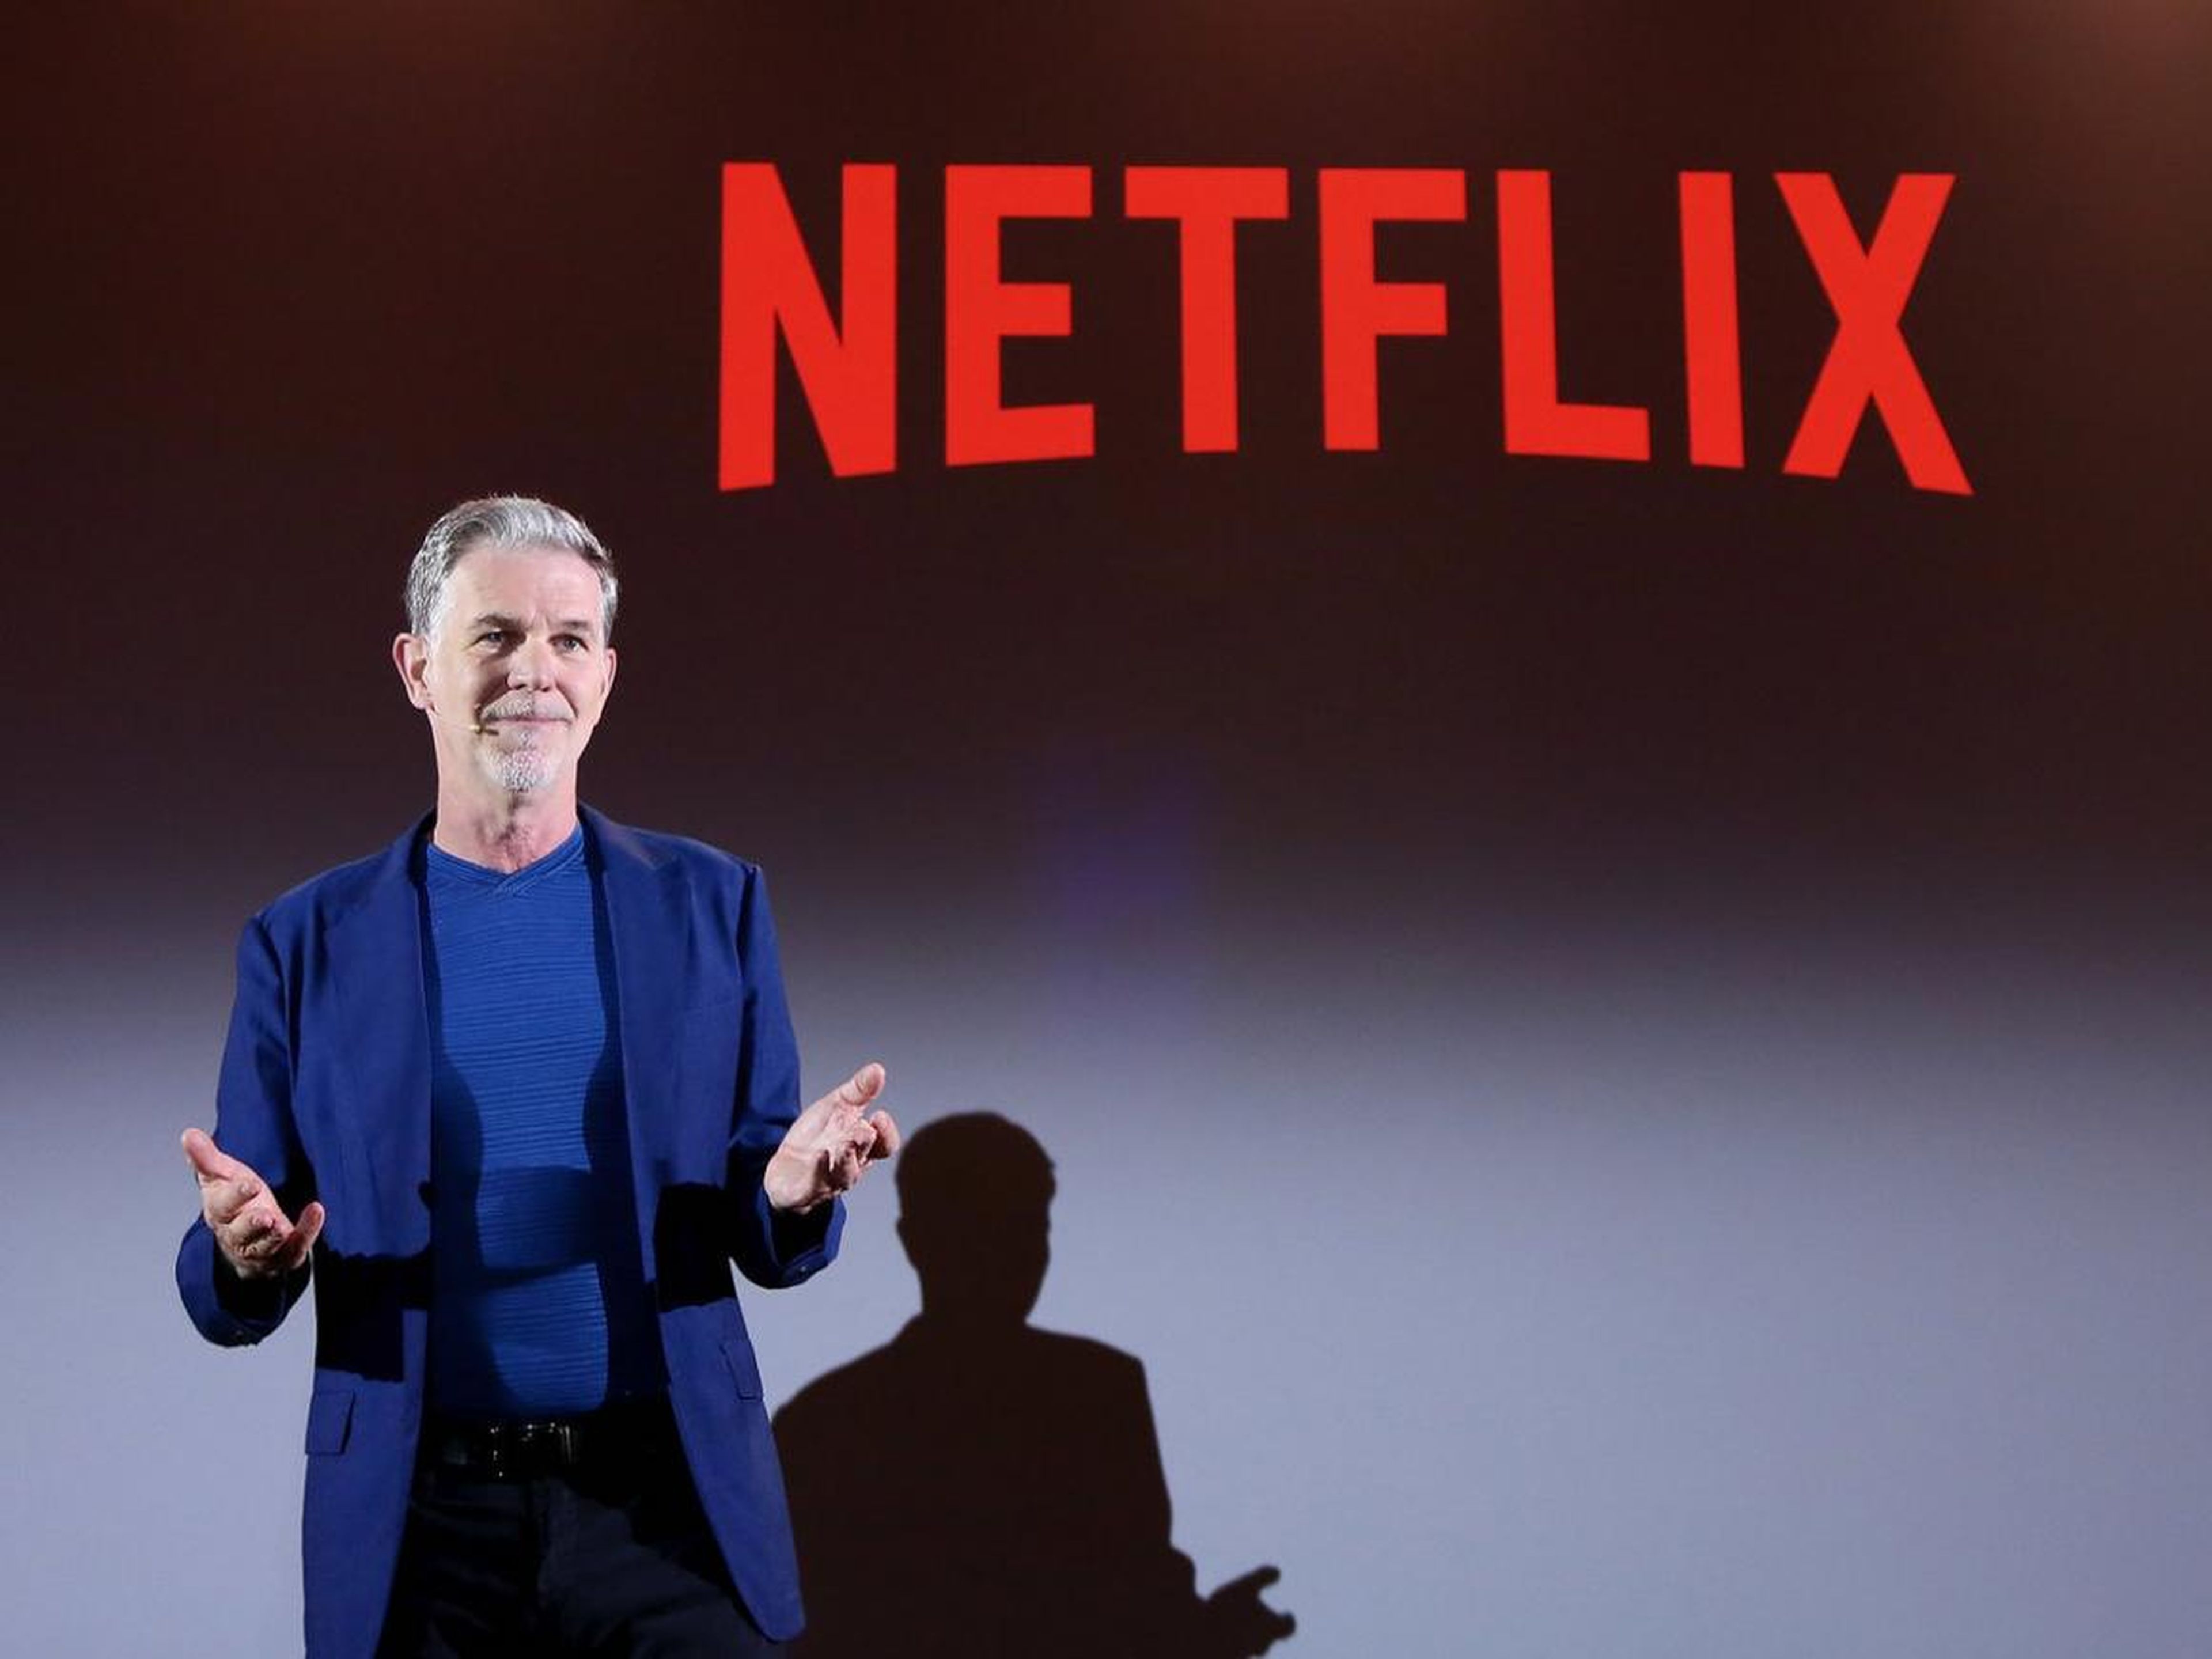 Reed Hastings, CEO de Netflix